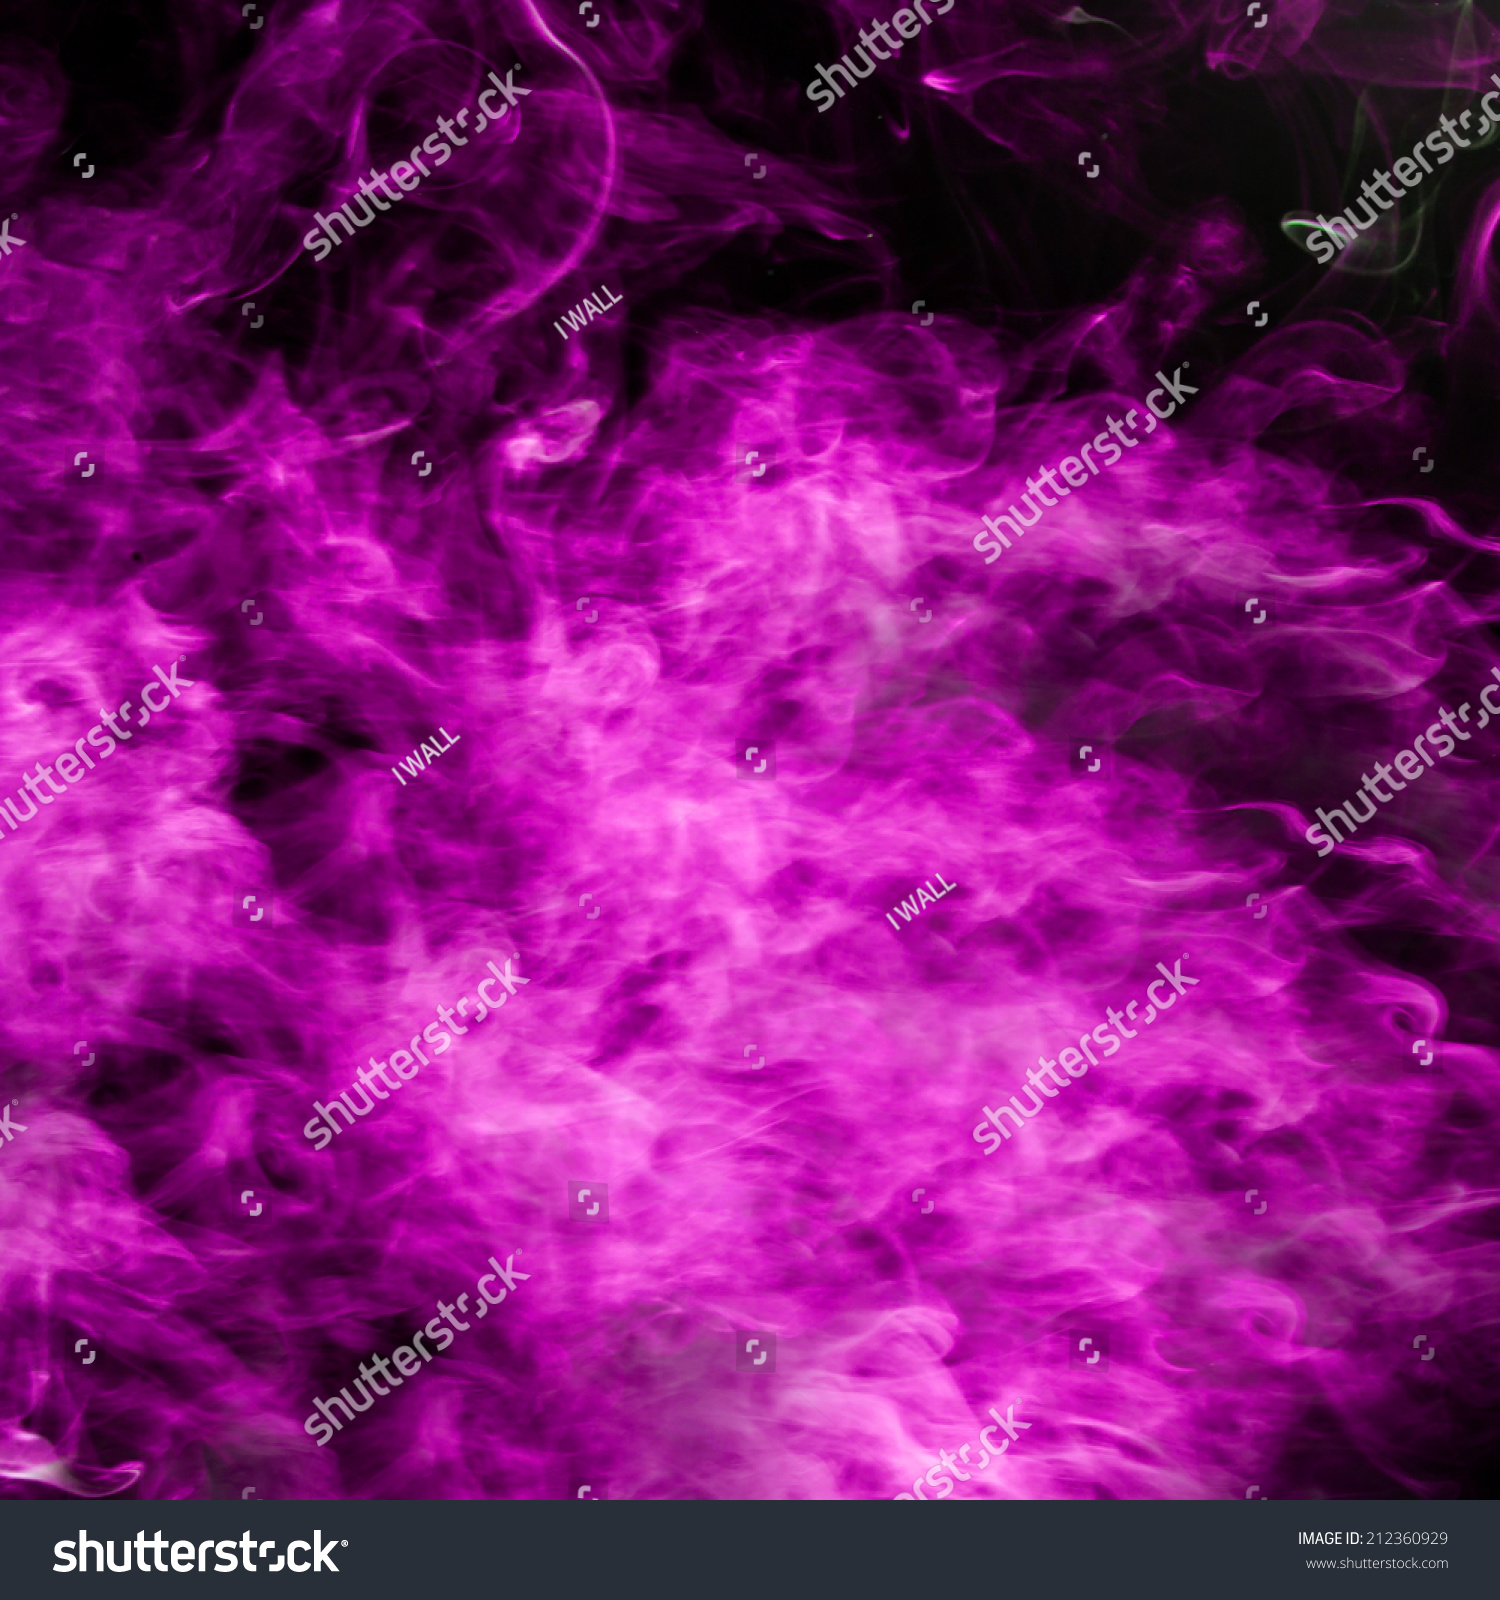 Purple Smoke Background Stock Photo 212360929 - Shutterstock